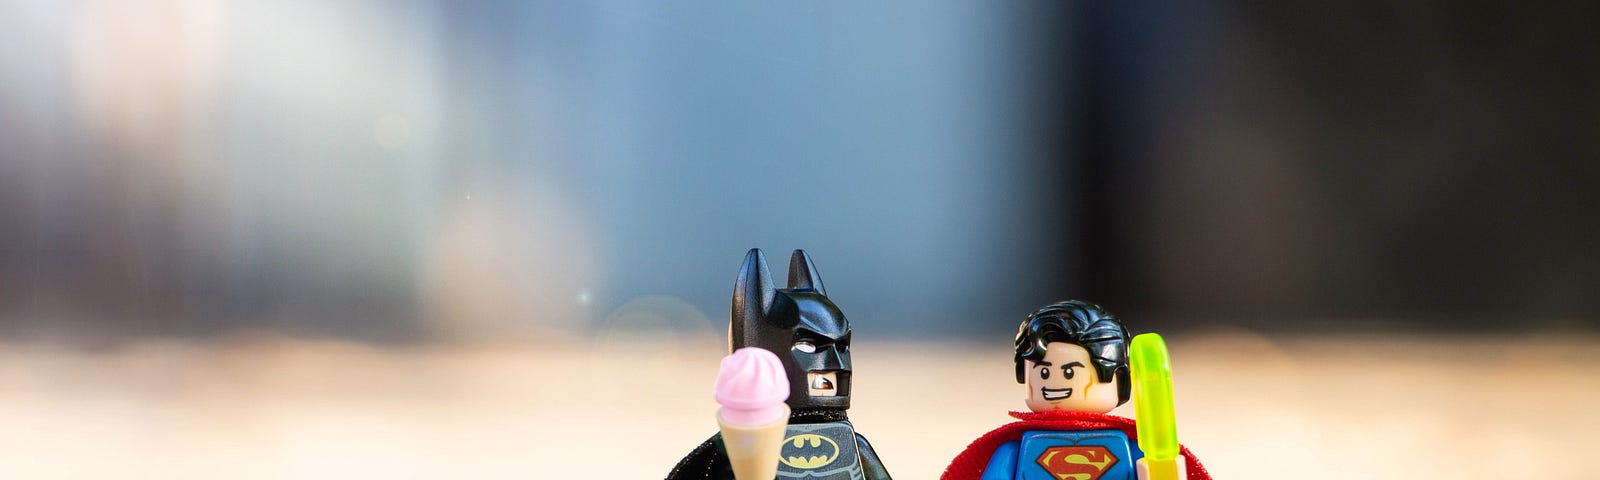 Lego Superman and Batman figures holding ice-cream